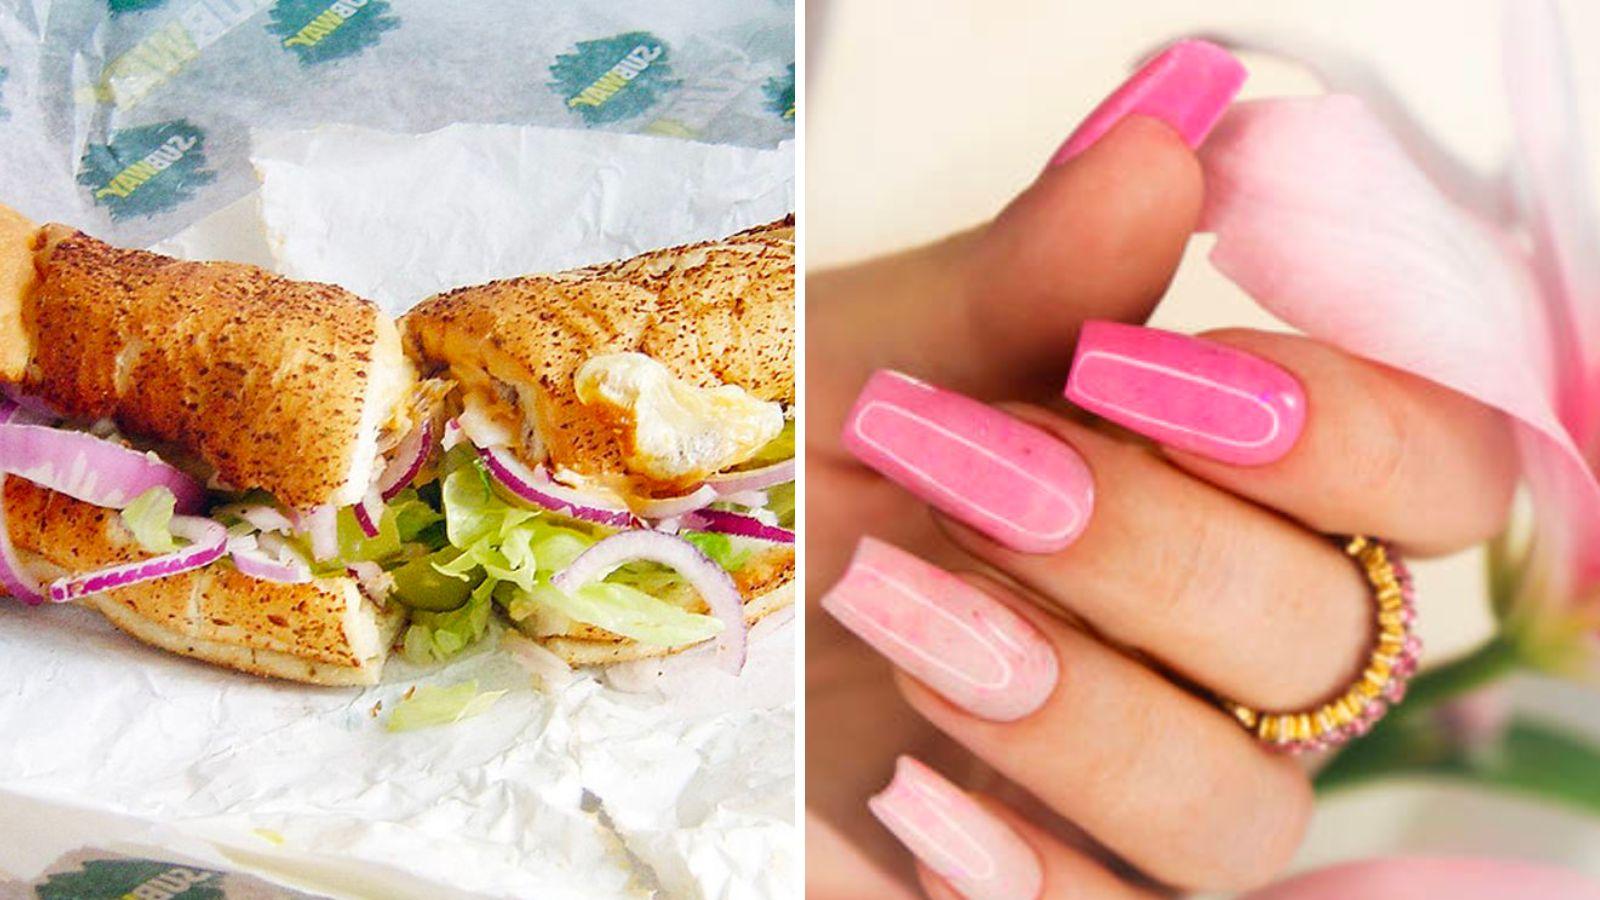 Subway customer finds fingernail in sandwich